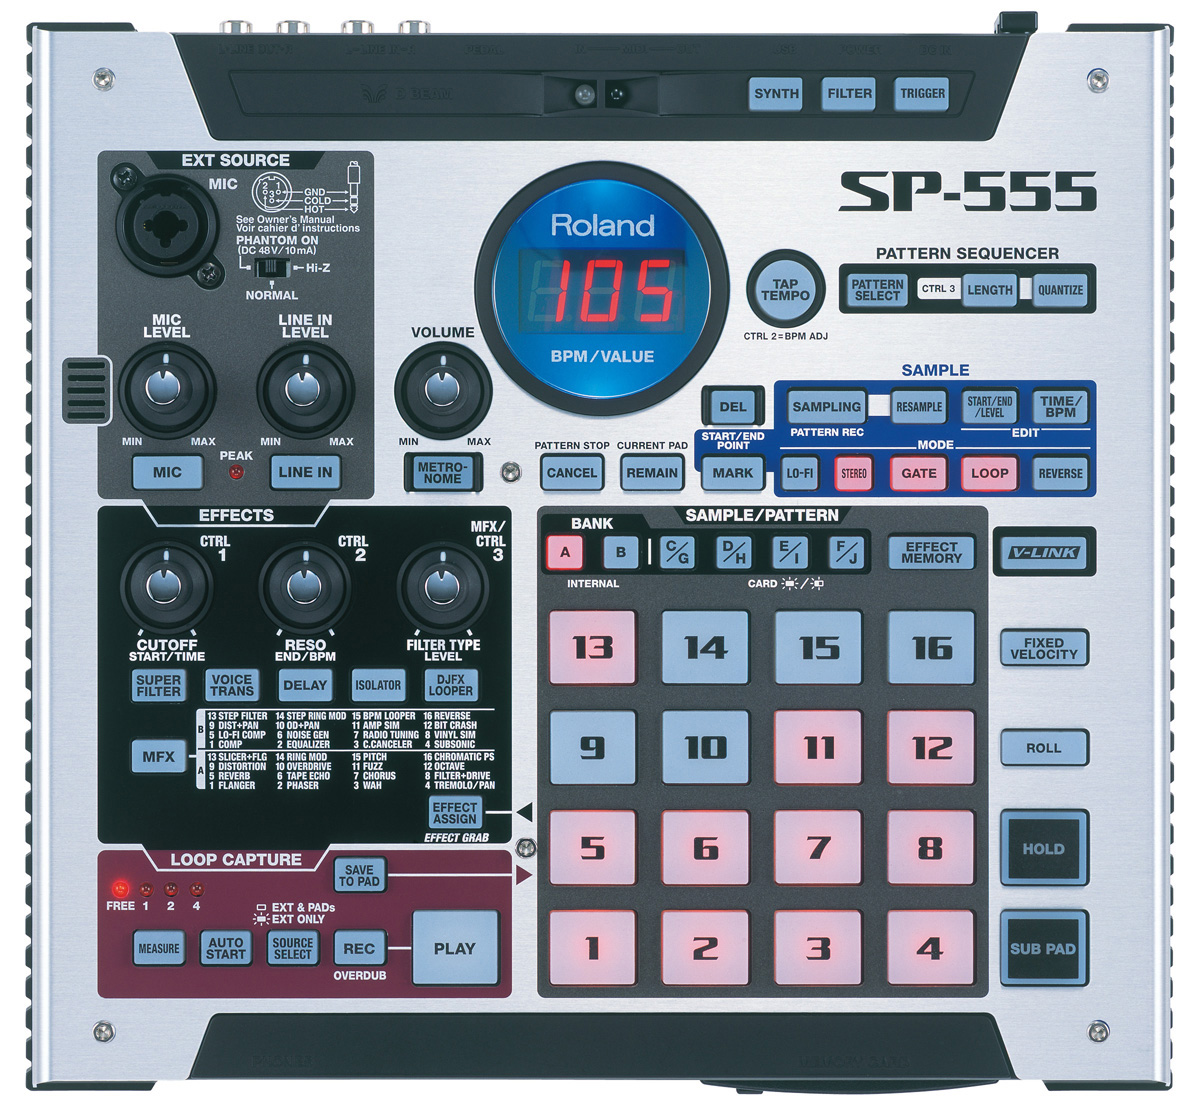 Roland SP-555